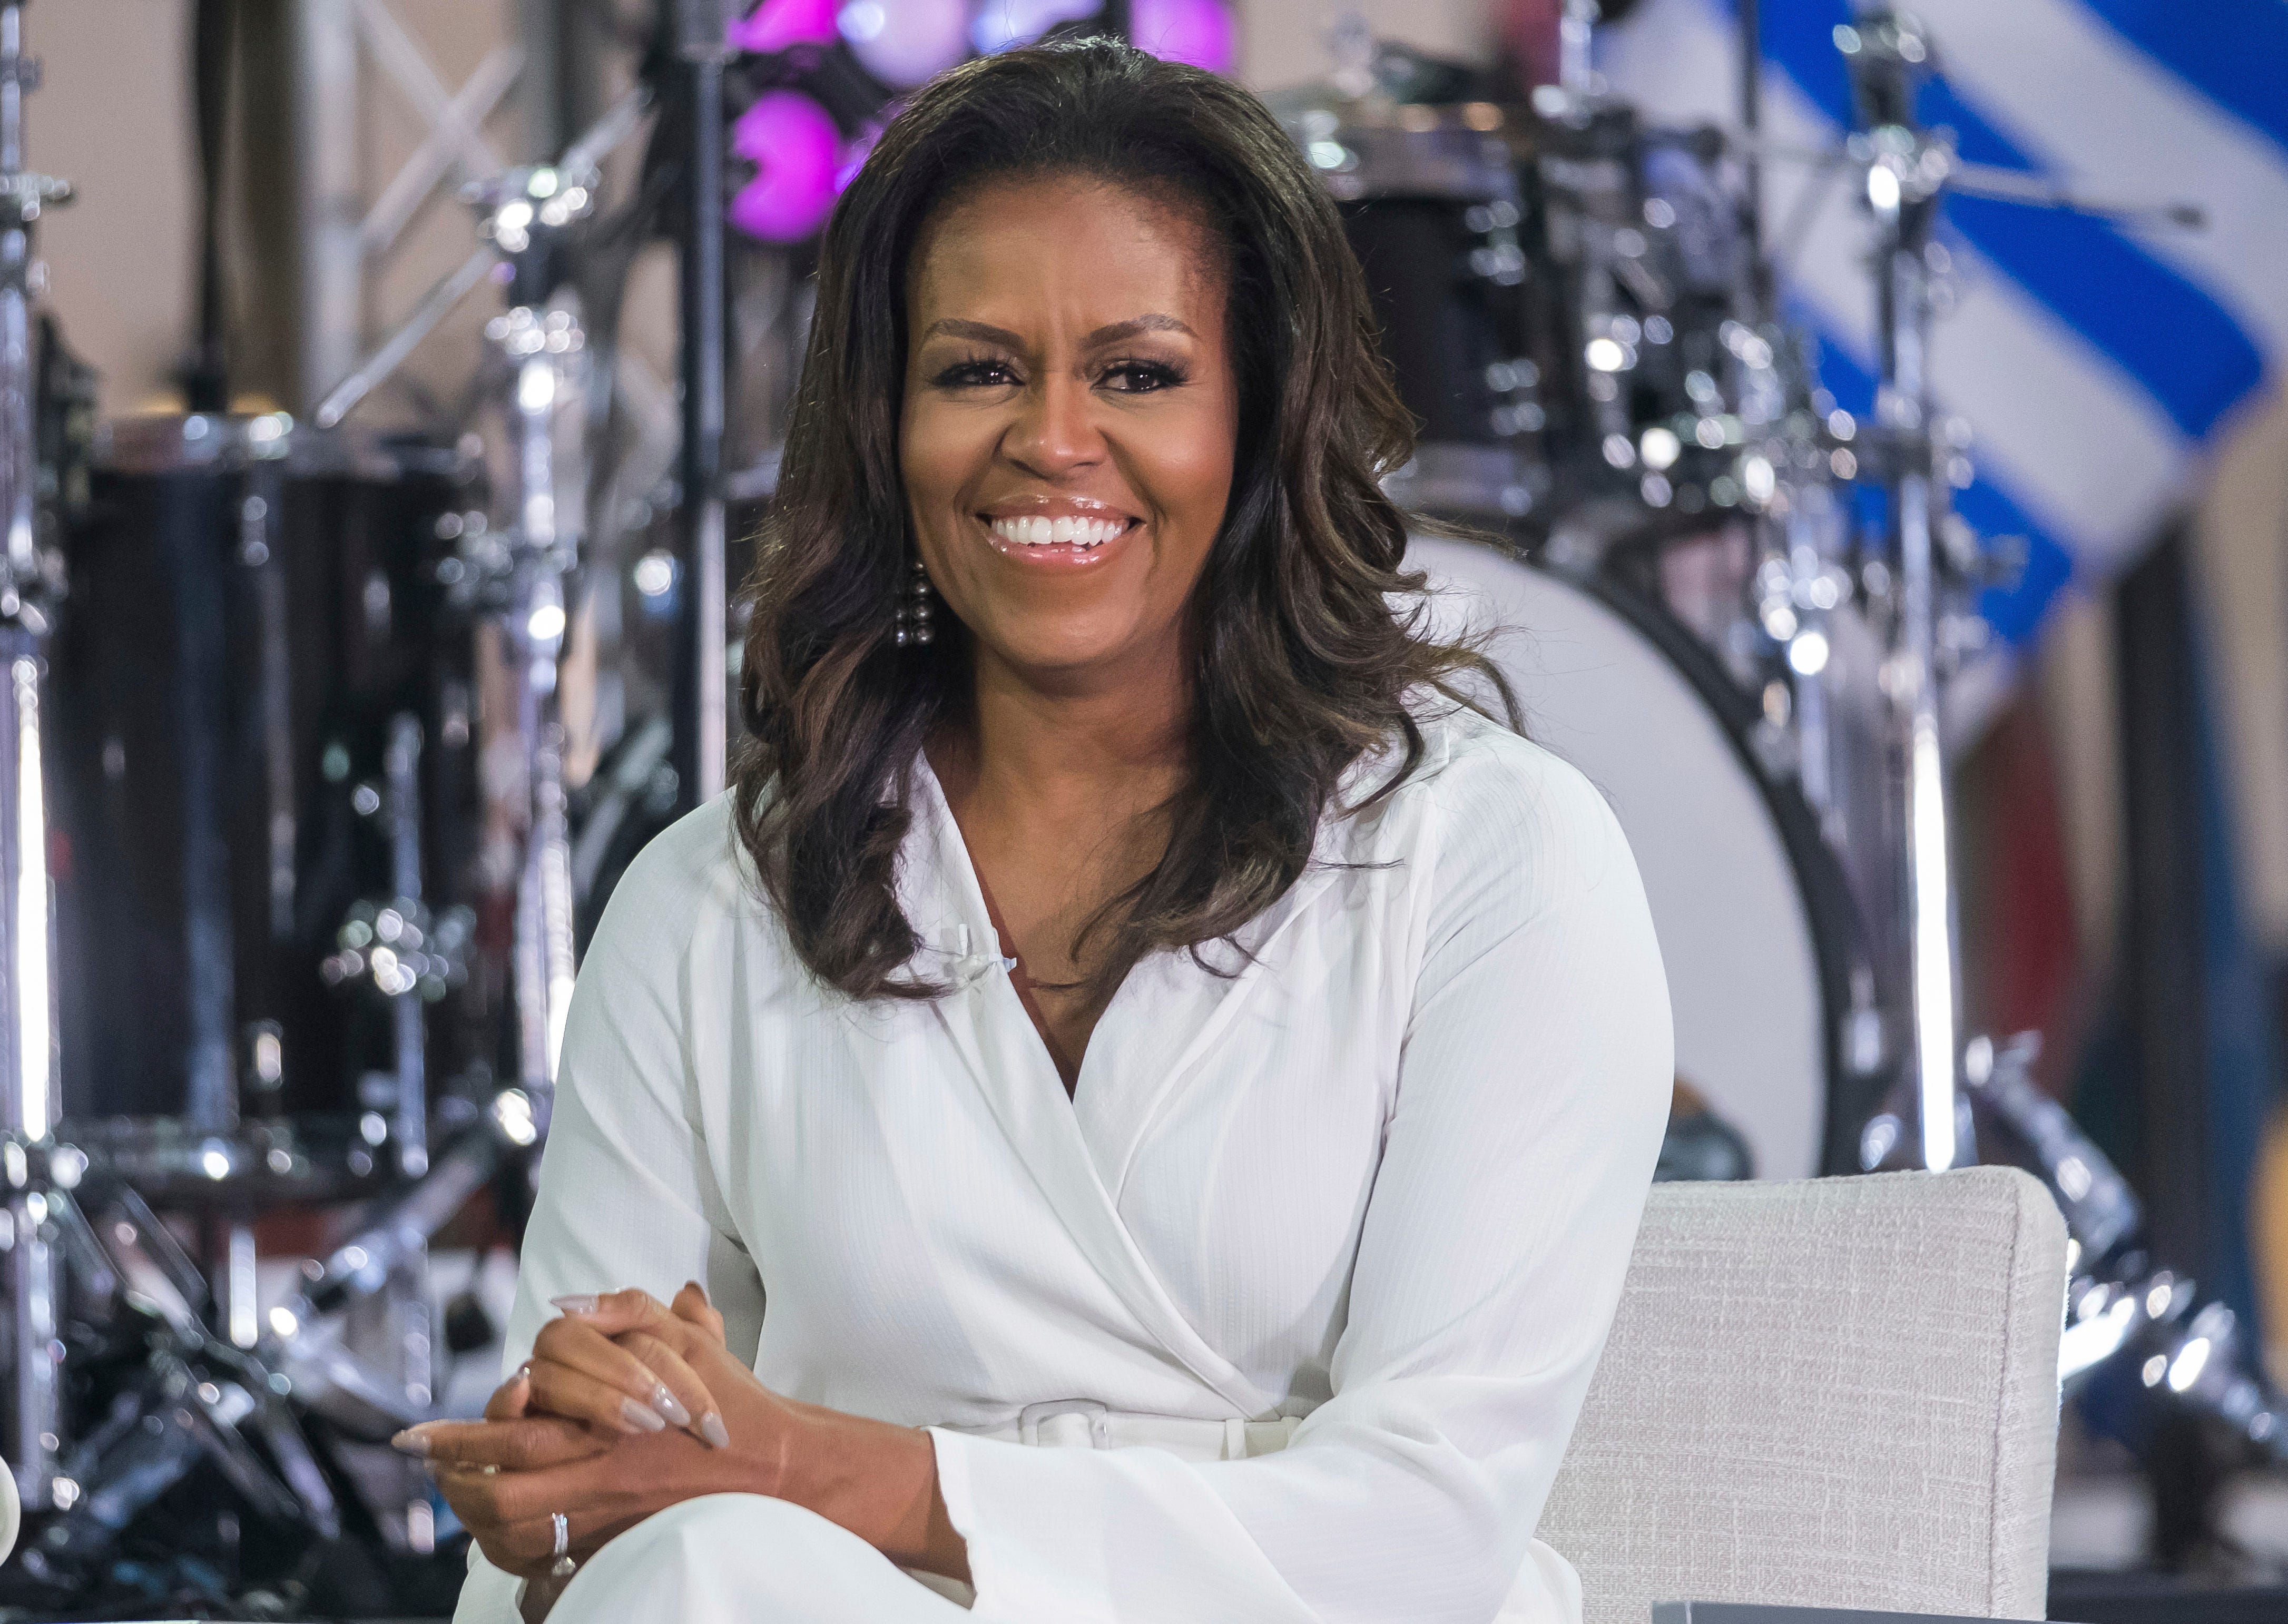 Michelle Obama used IVF to have Malia and Sasha, struggled to conceive